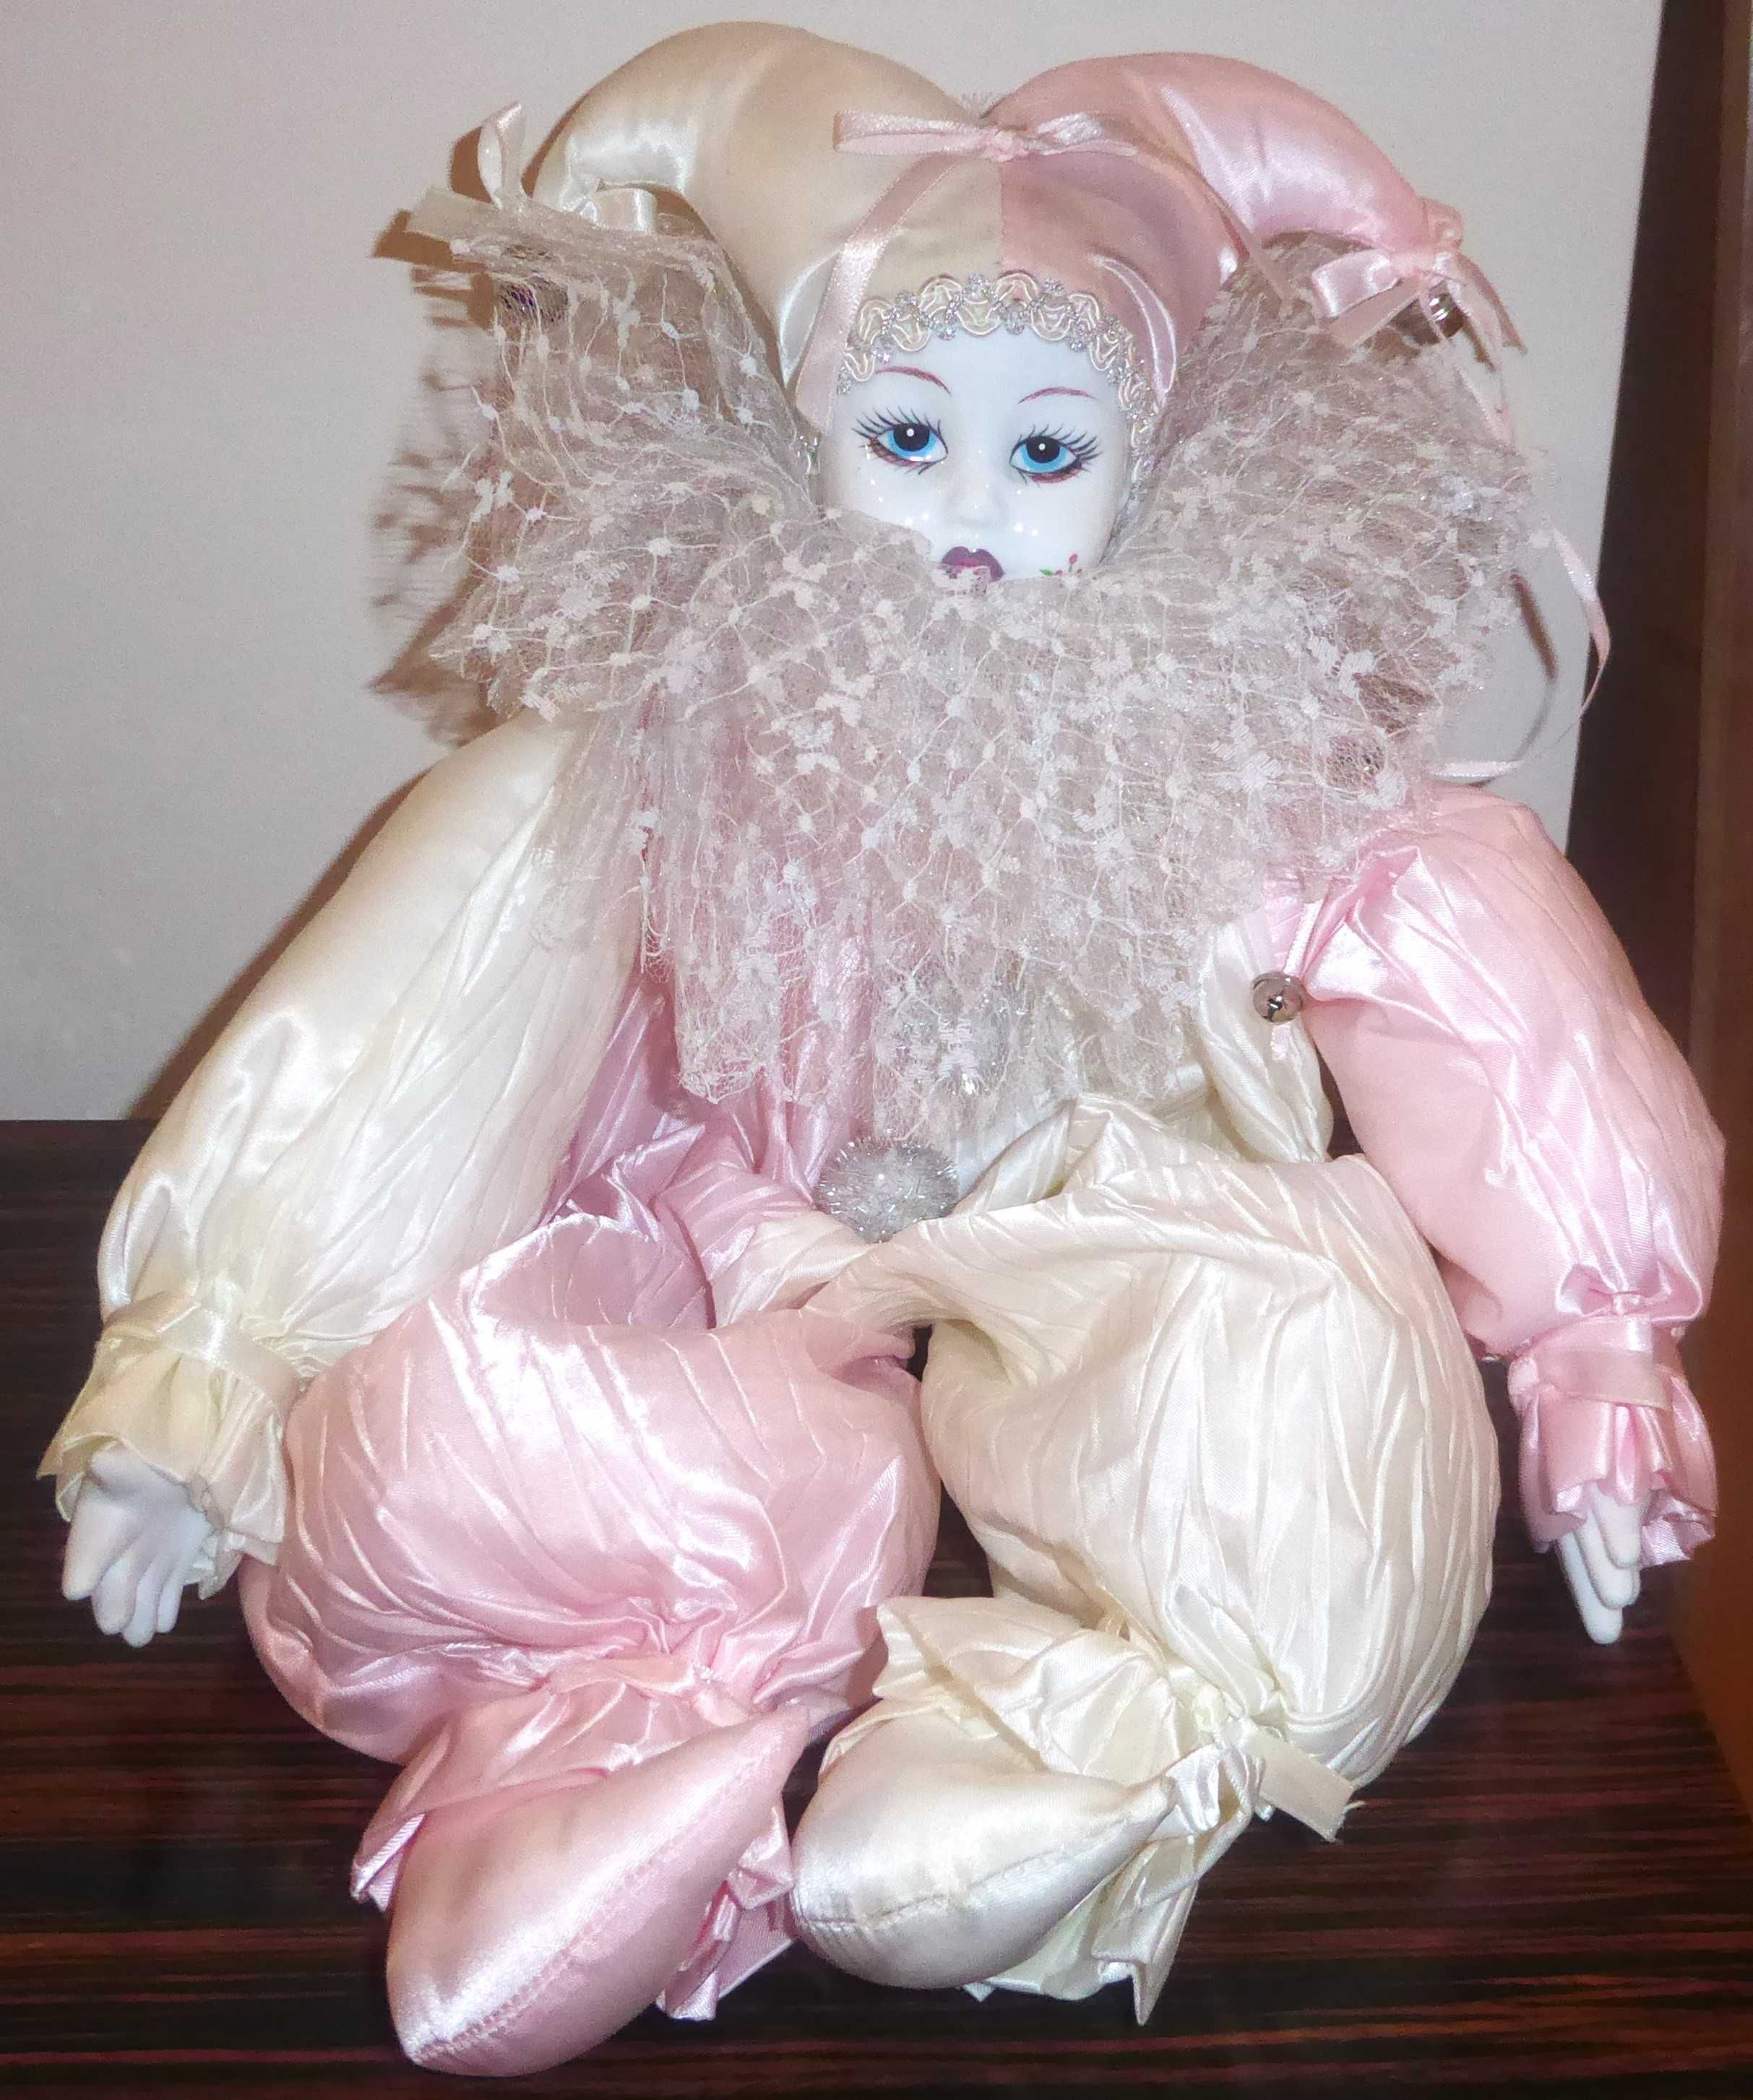 Boneco porcelana tipo "Pierrot"  - 50 cm